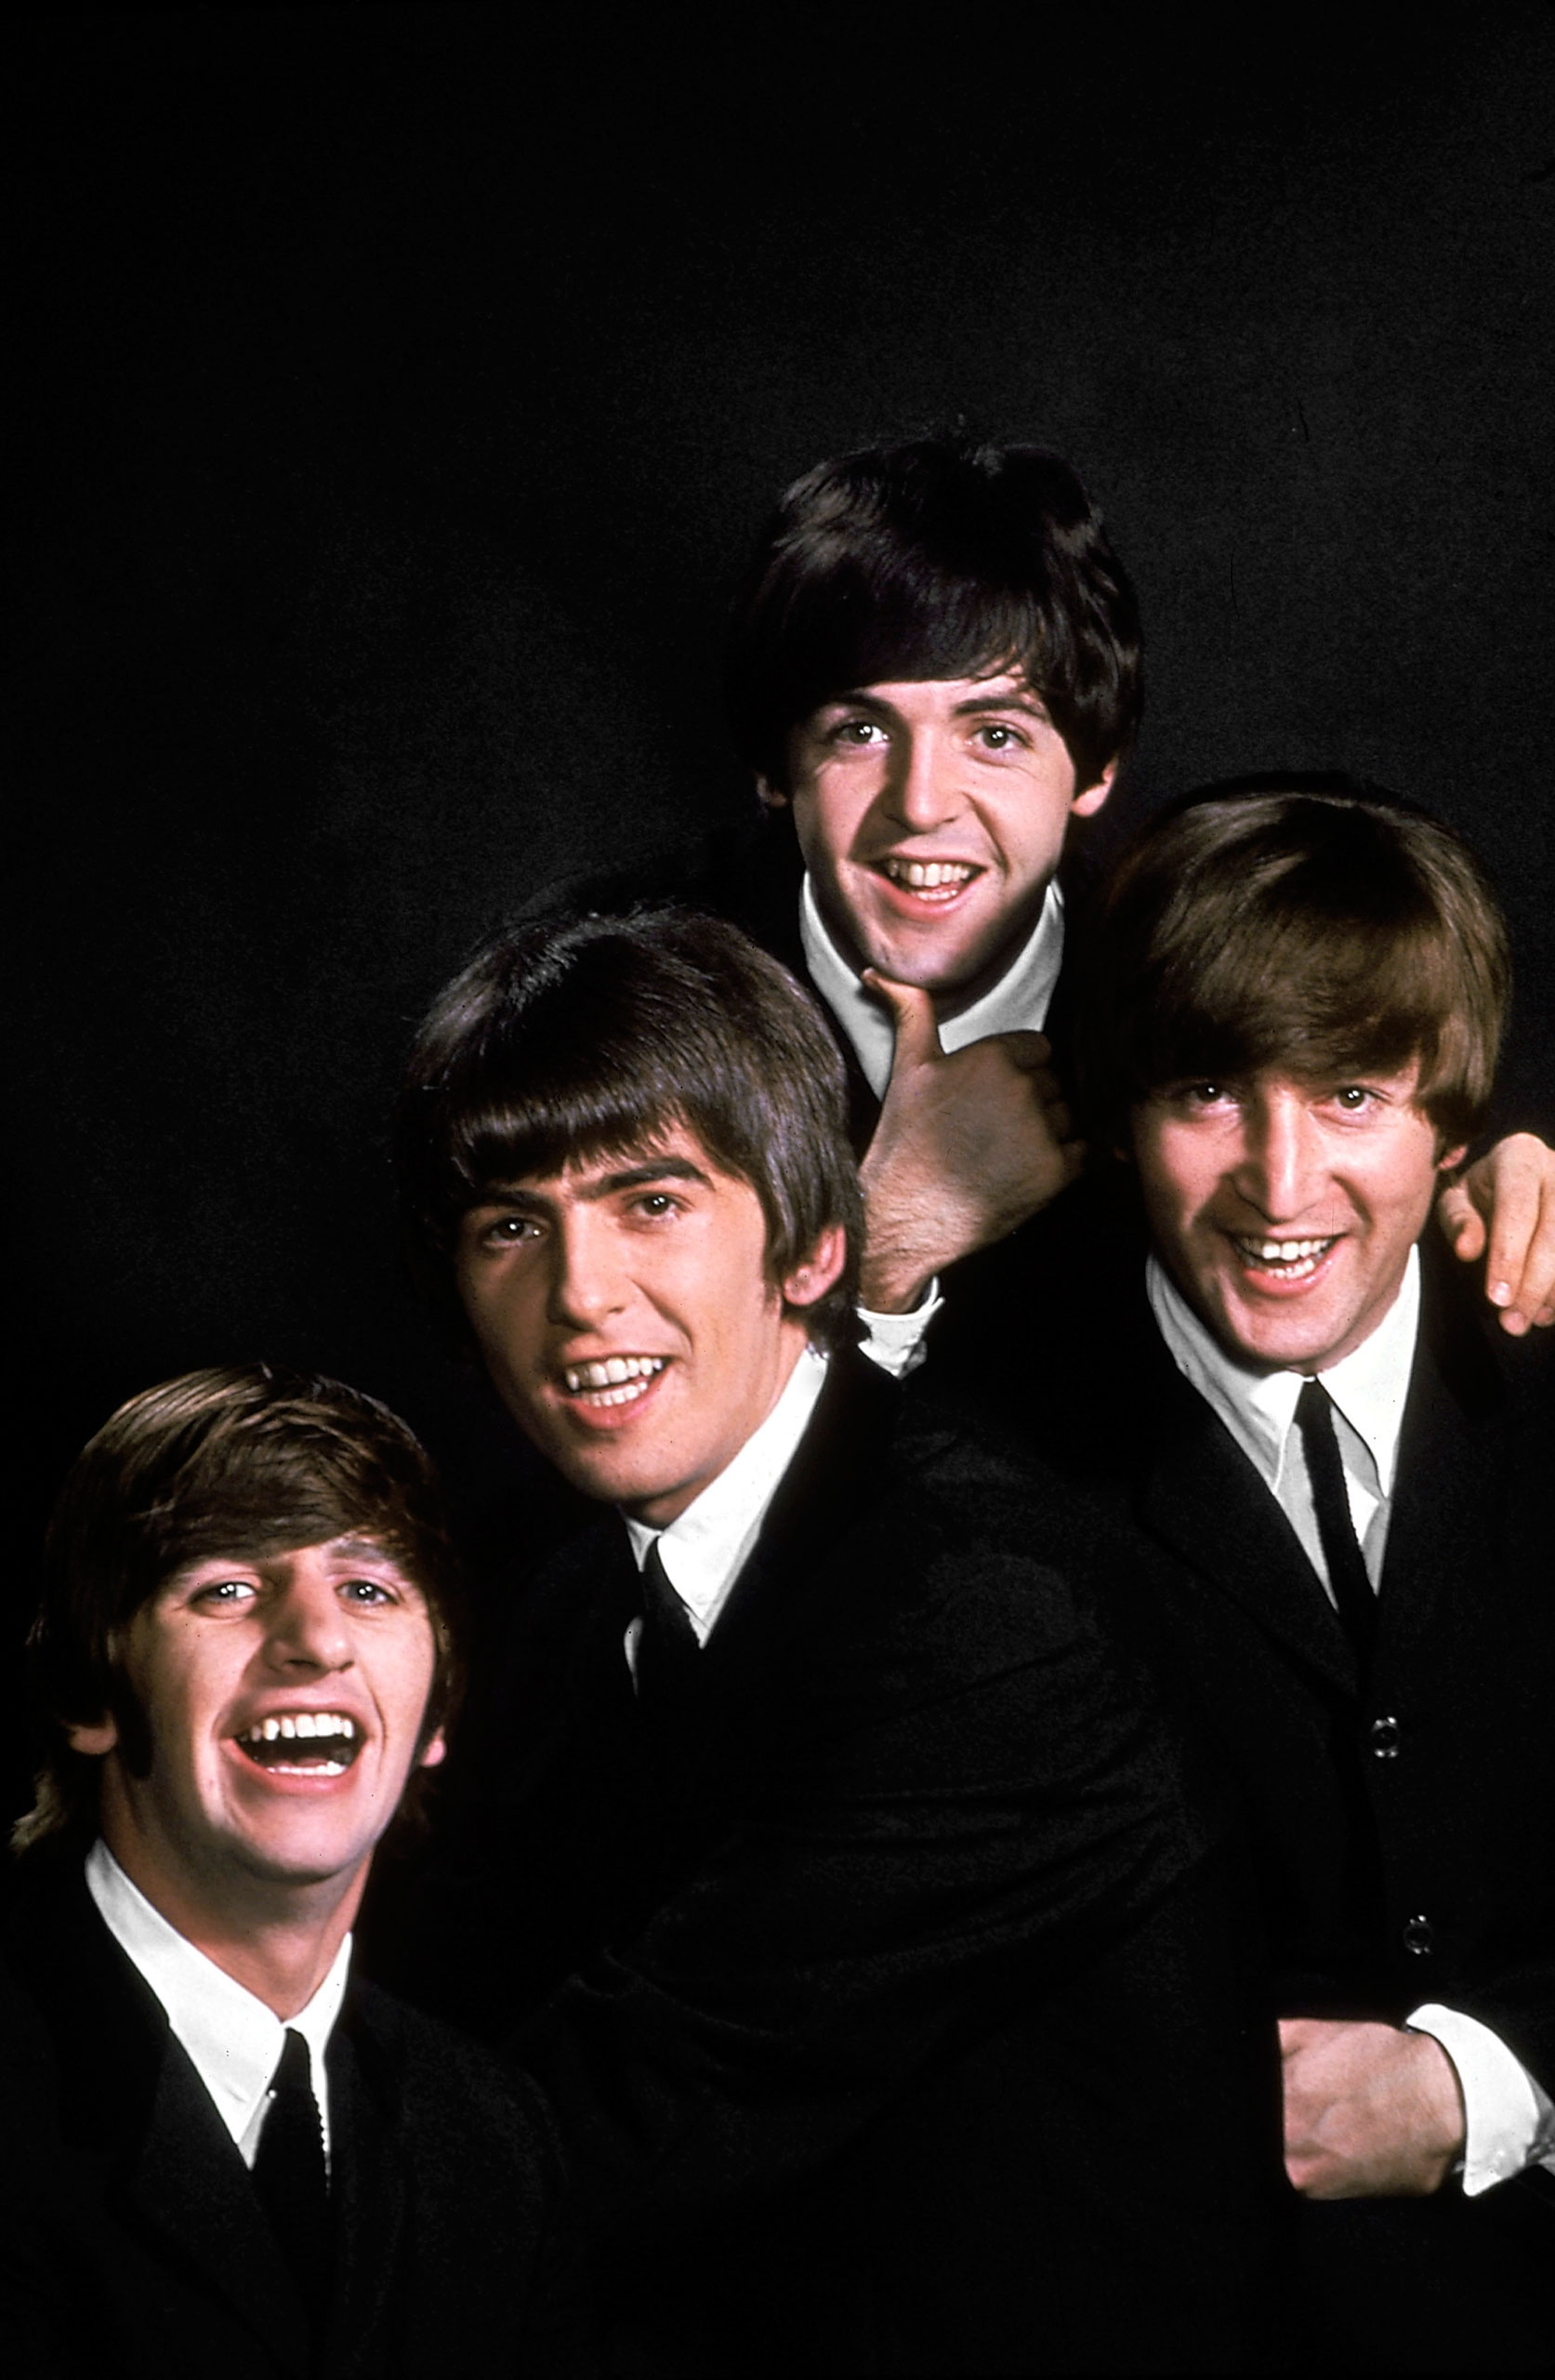 John Lennon, Paul McCartney, George Harrison, and Ringo Starr pose in a portrait on a black backdrop in January 1964